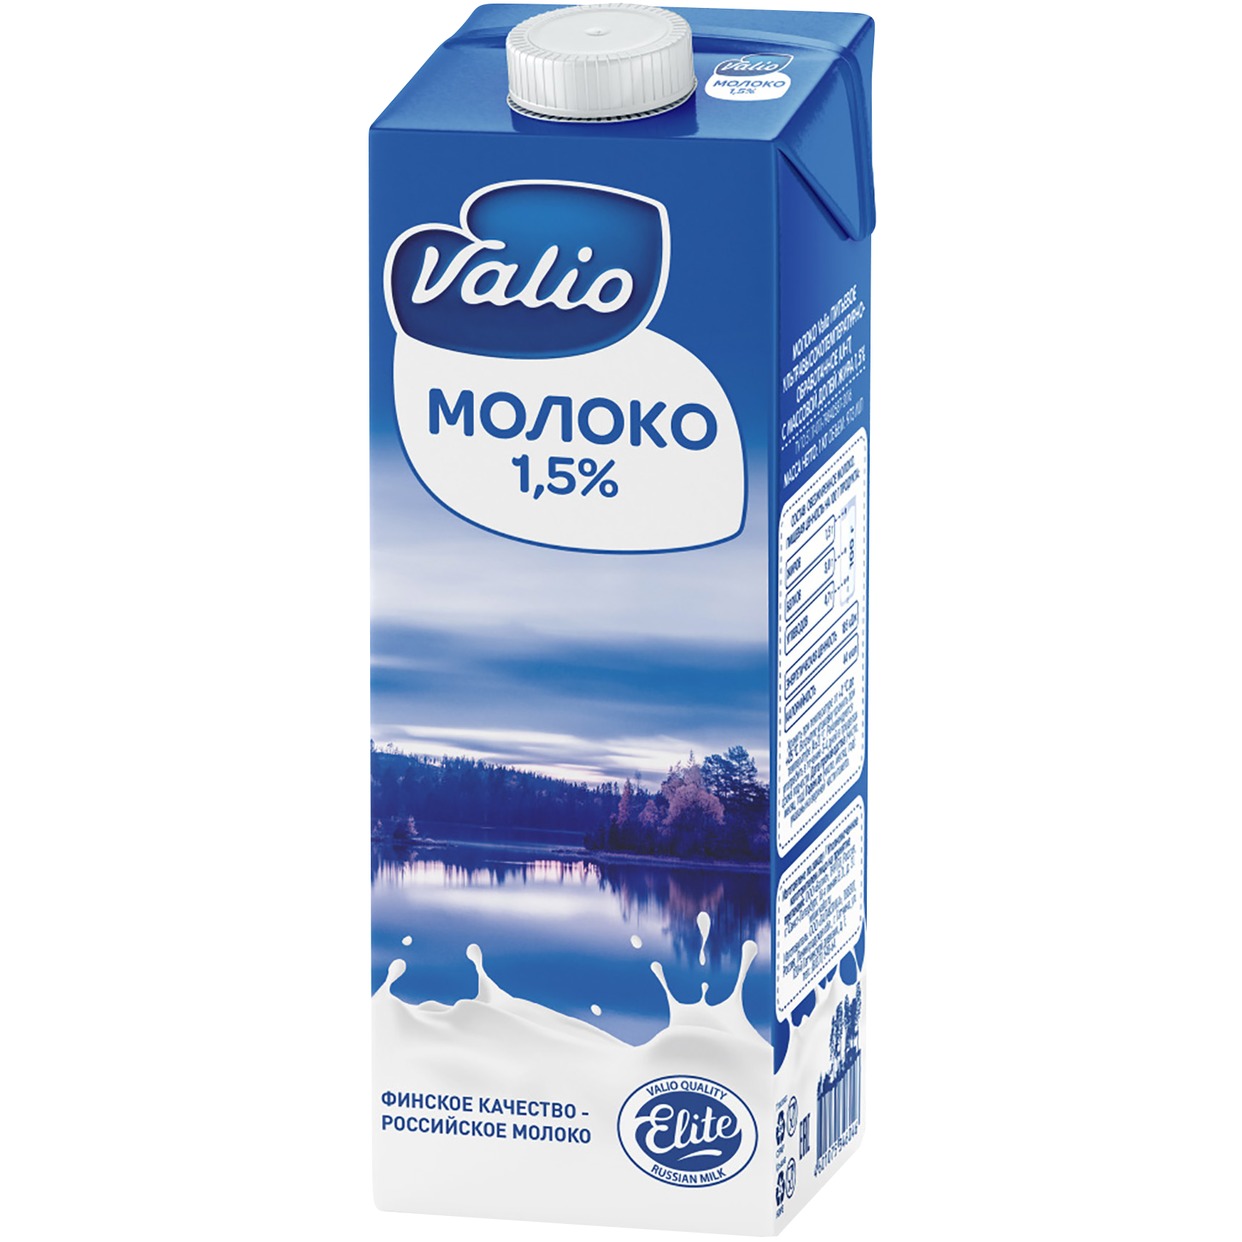 VALIO Молоко UHT 1,5% 1кг по акции в Пятерочке